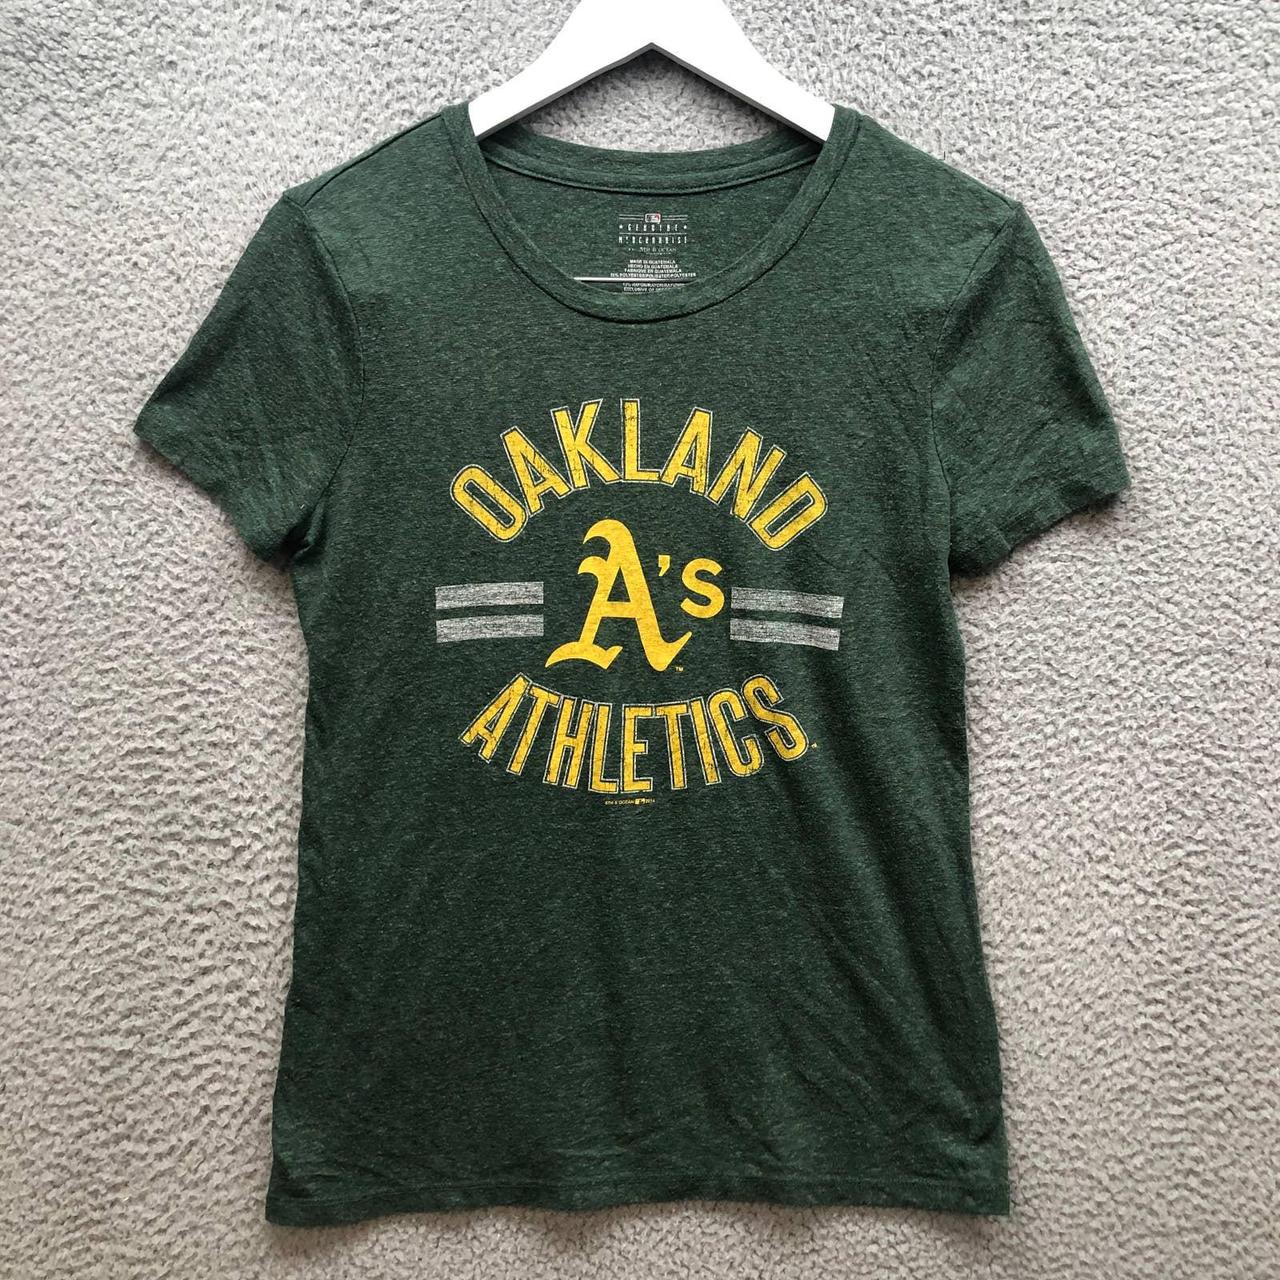 Oakland Athletics women shirt 2021 (new) This is a - Depop